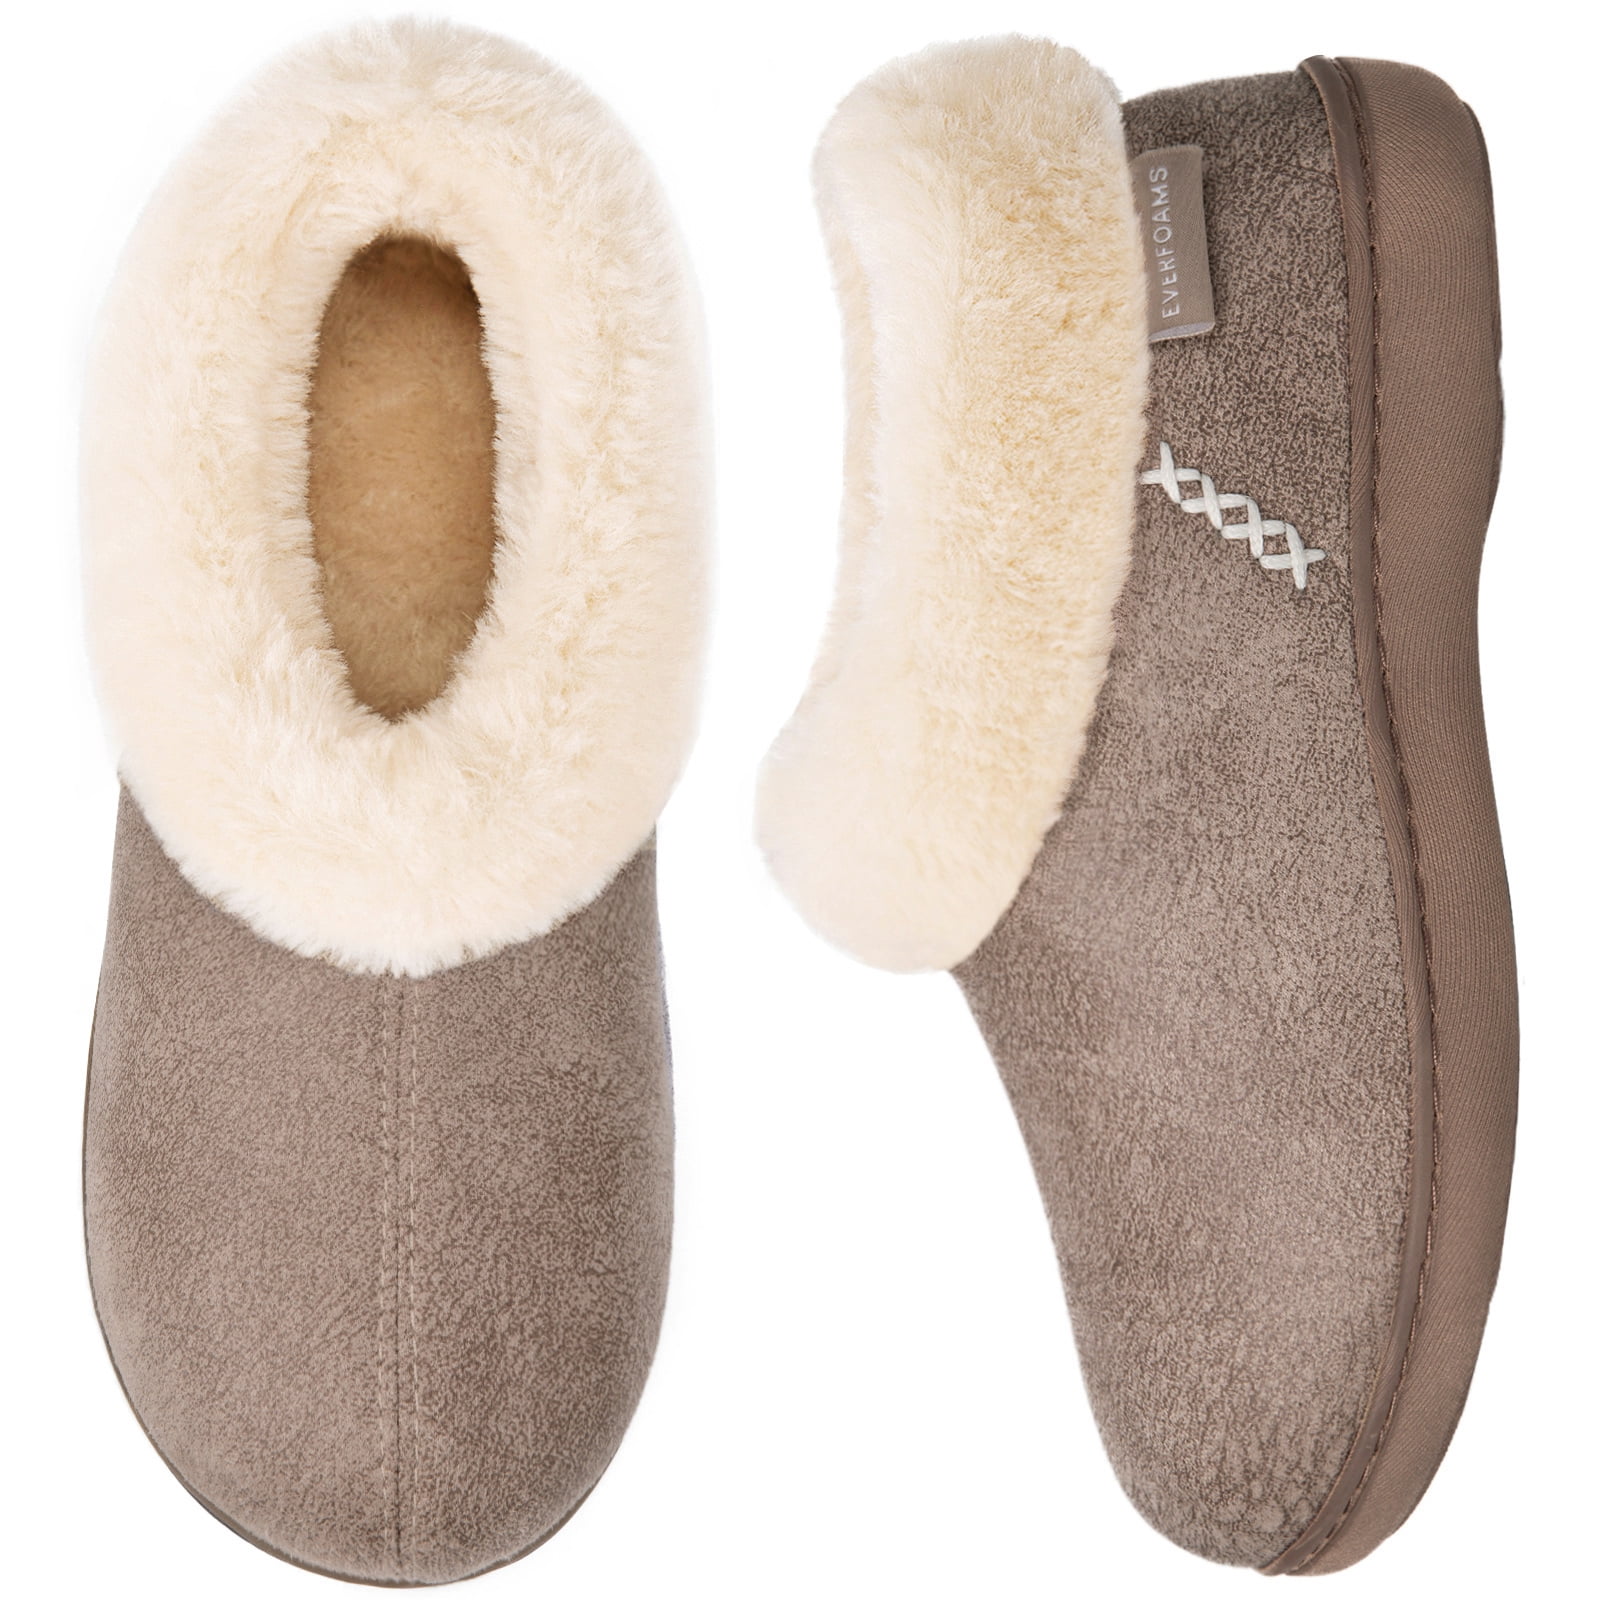 EverFoams Women's Micro Suede Cozy Memory Foam Winter Slippers with ...